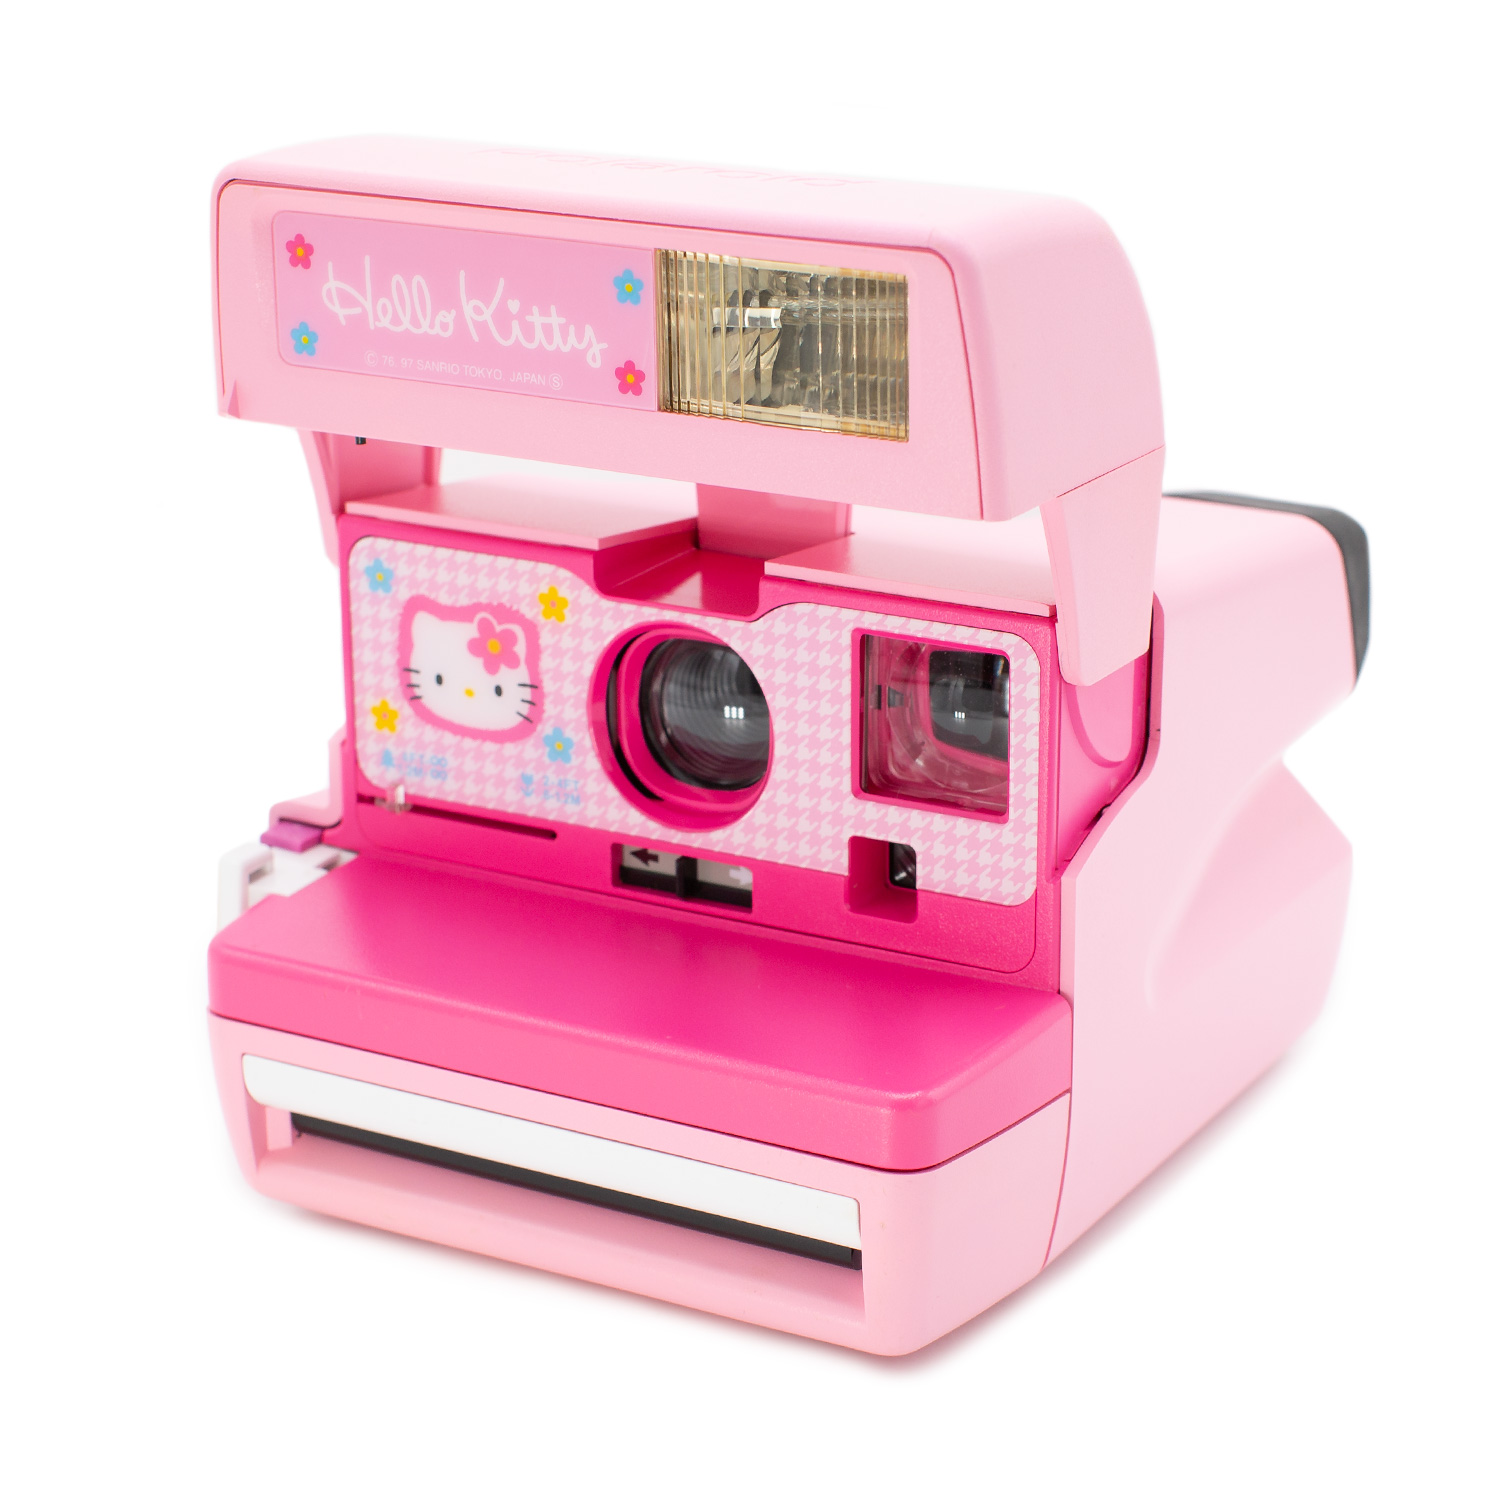 Polaroid Hello Kitty limited edition 600 camera friends around the world tour 